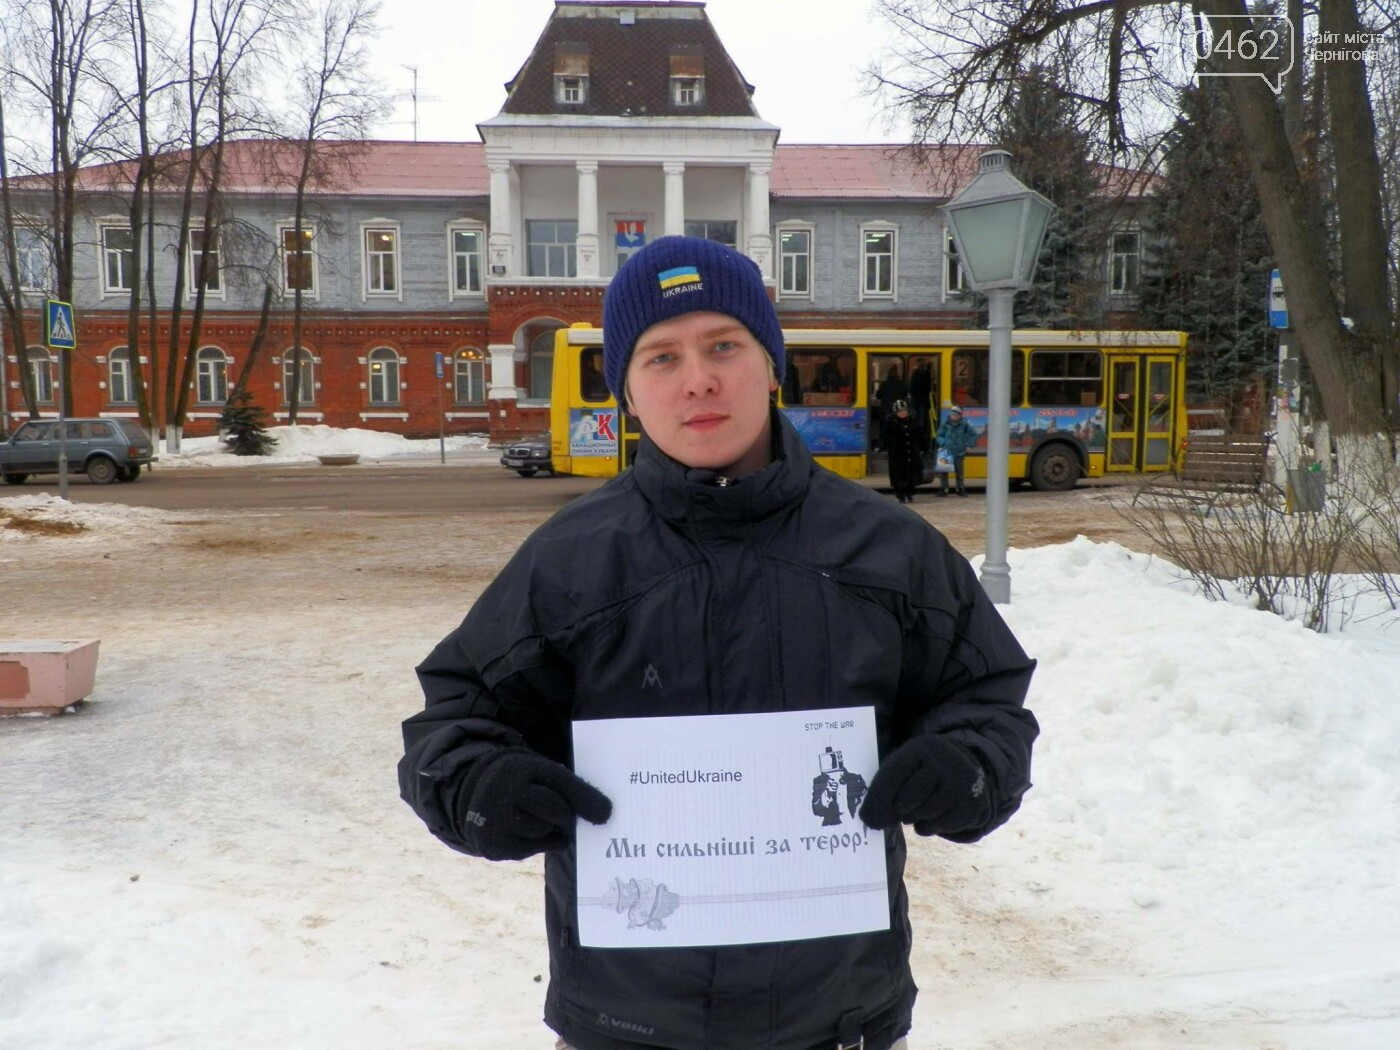 Сєргєй Карась під час акції «United Ukraine!» навпроти адміністрації міста Гусь-Хрустальний, 2015-й рік